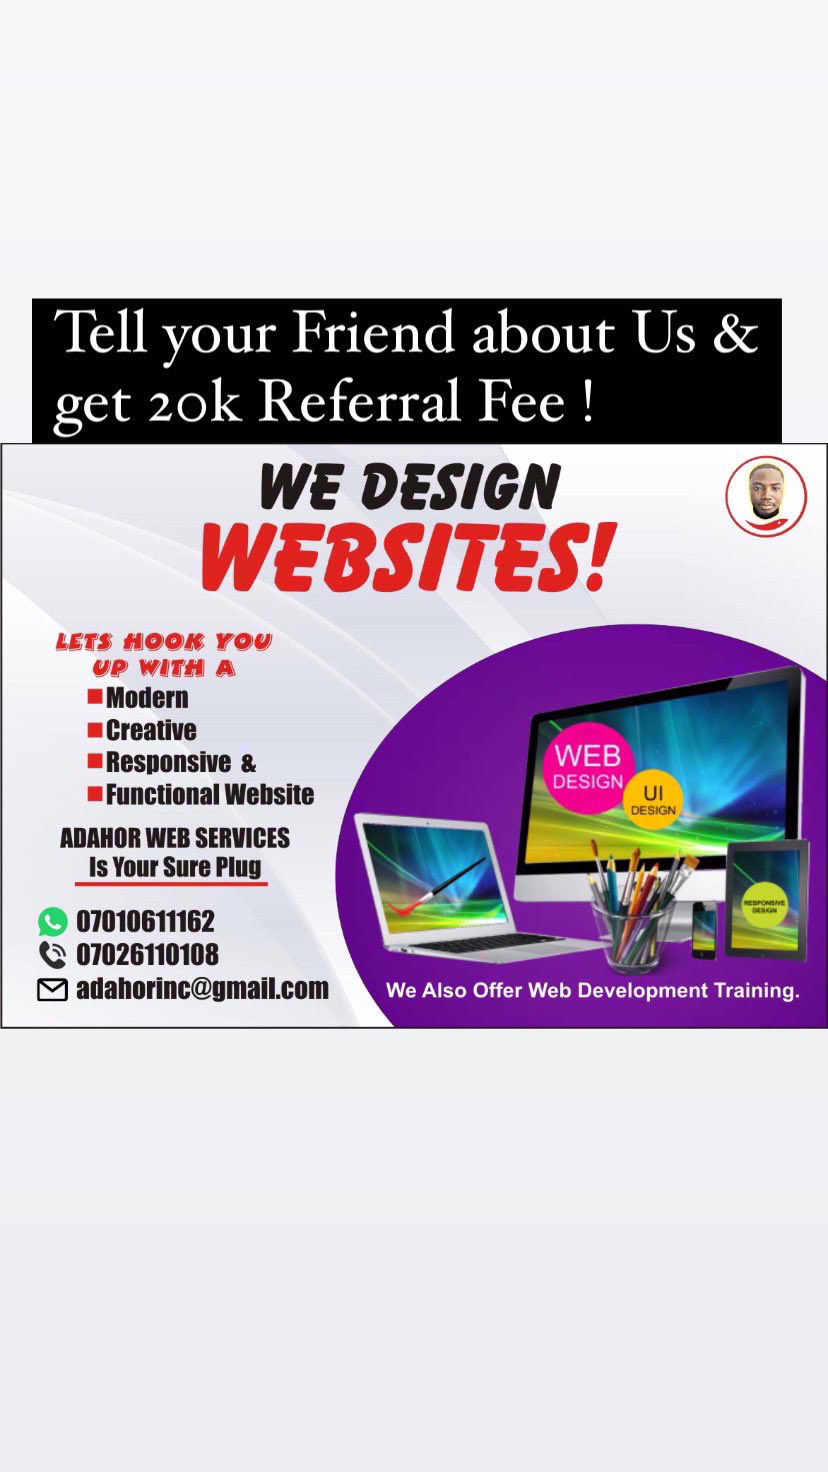 Adhor web services is your sure plug